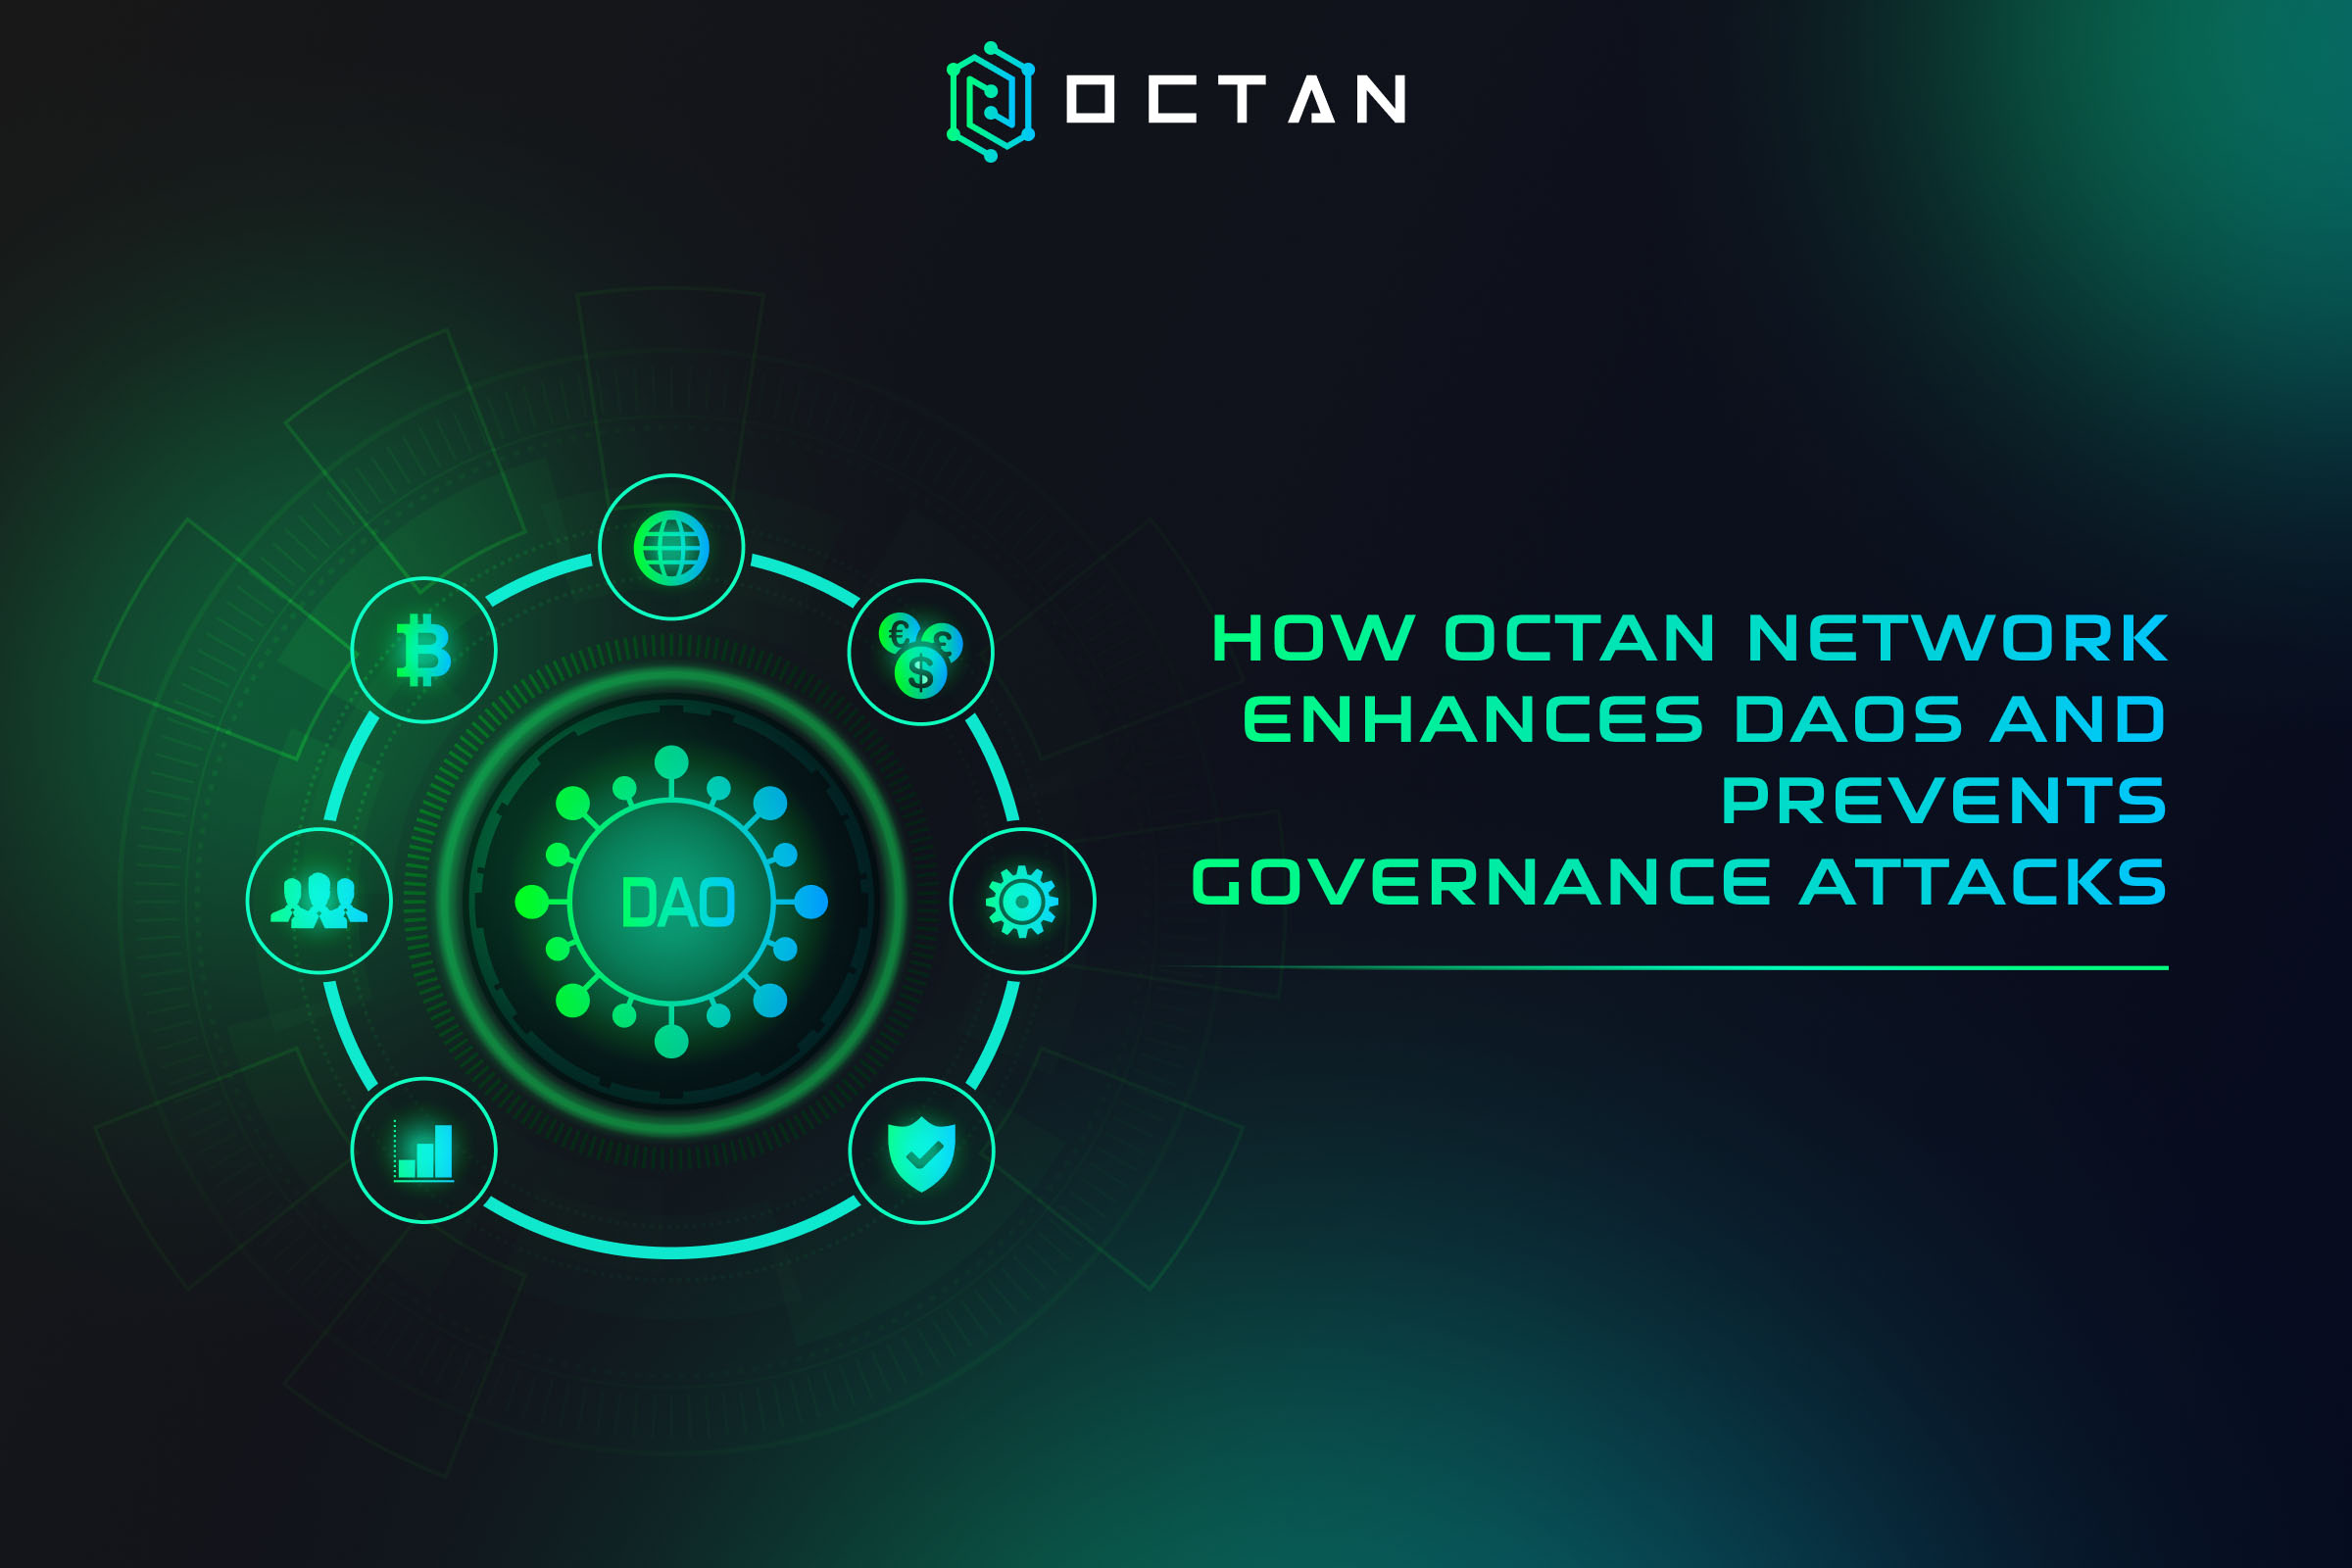 How Octan Network Enhances DAOs and Prevents Governance Attacks